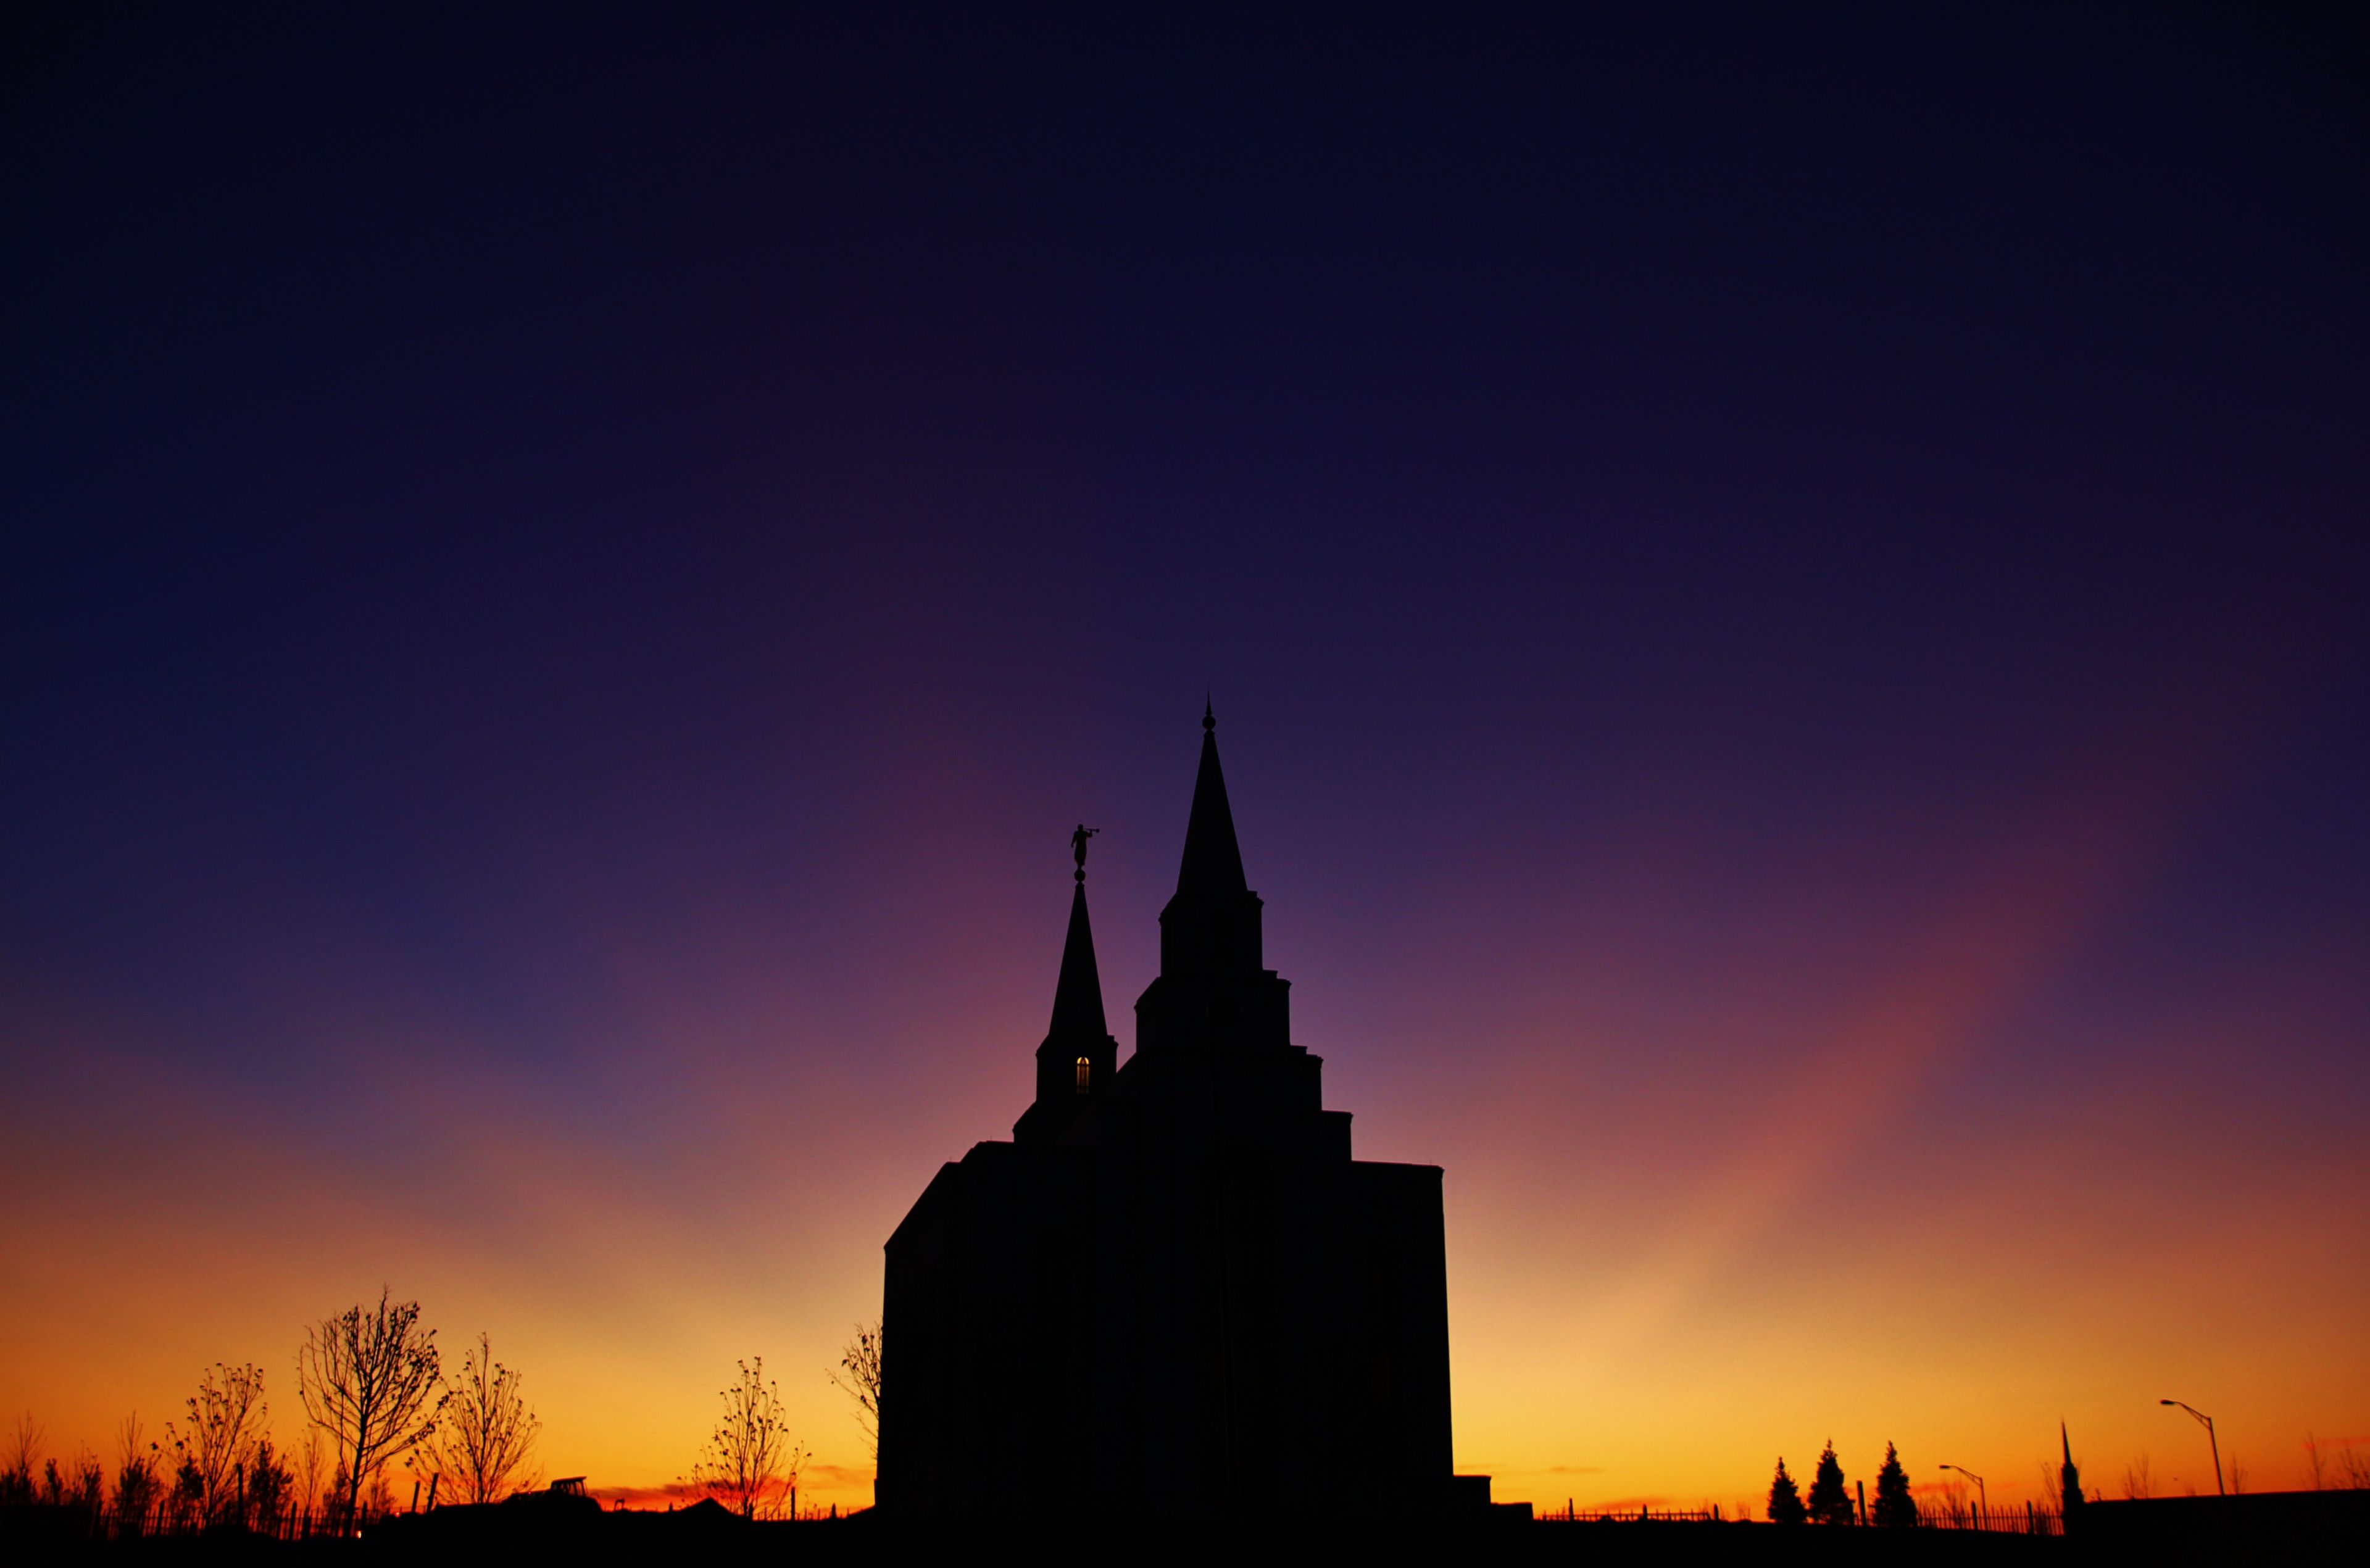 The Kansas City Missouri Temple at sunset, including scenery.